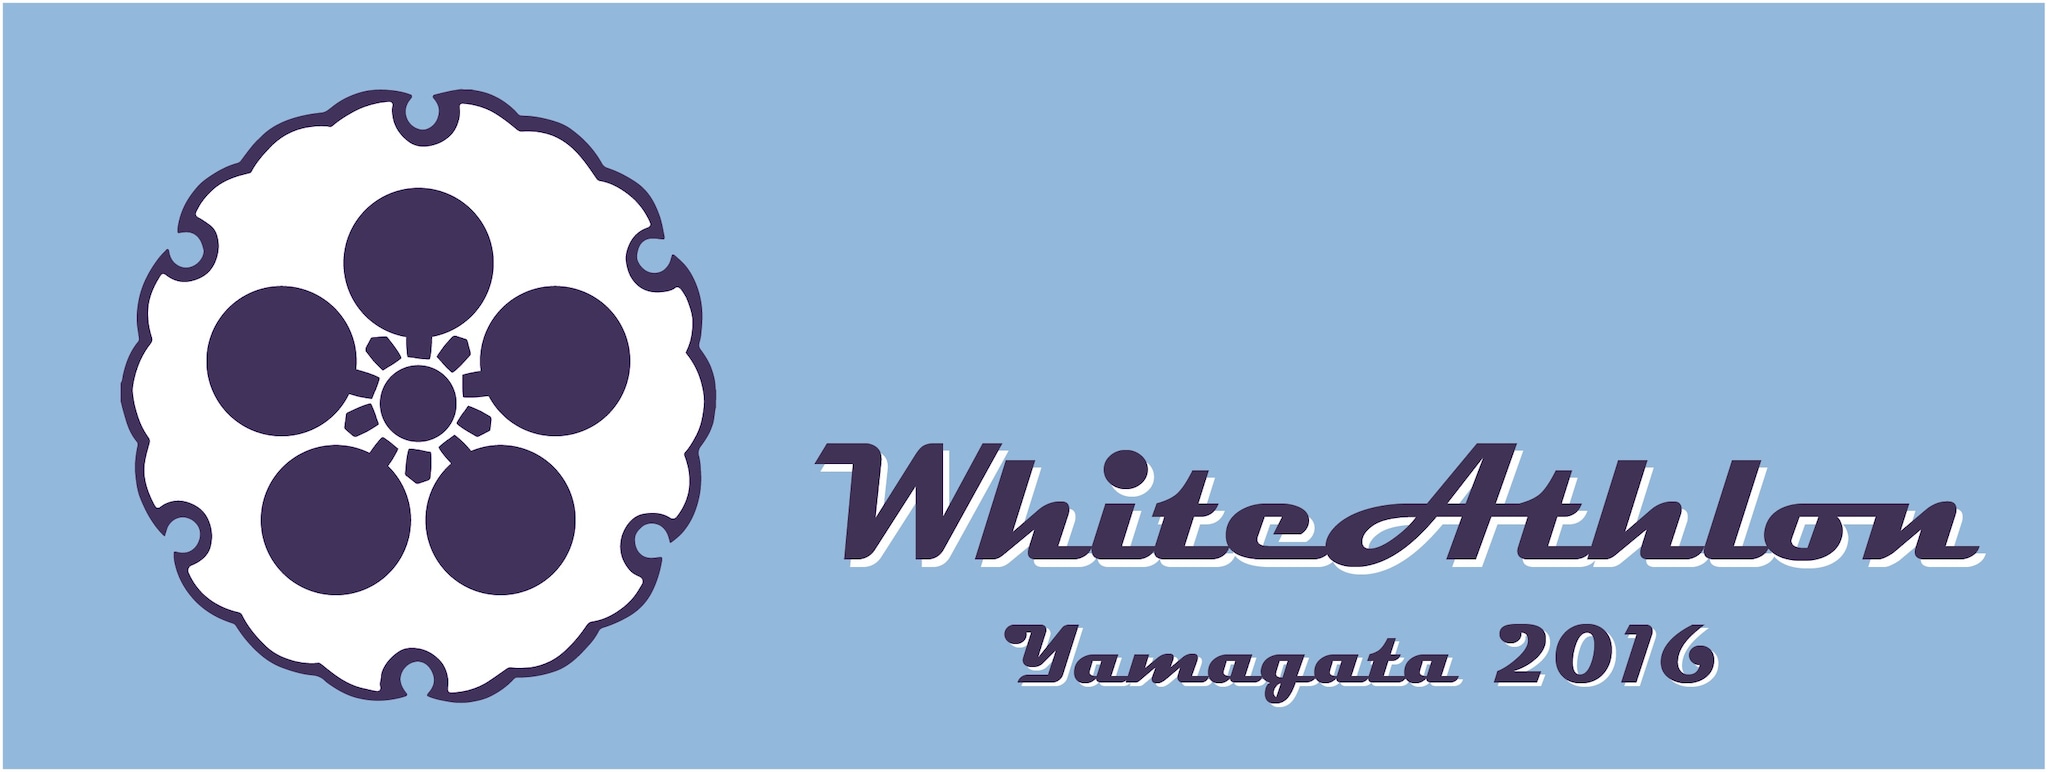 whiteathlon